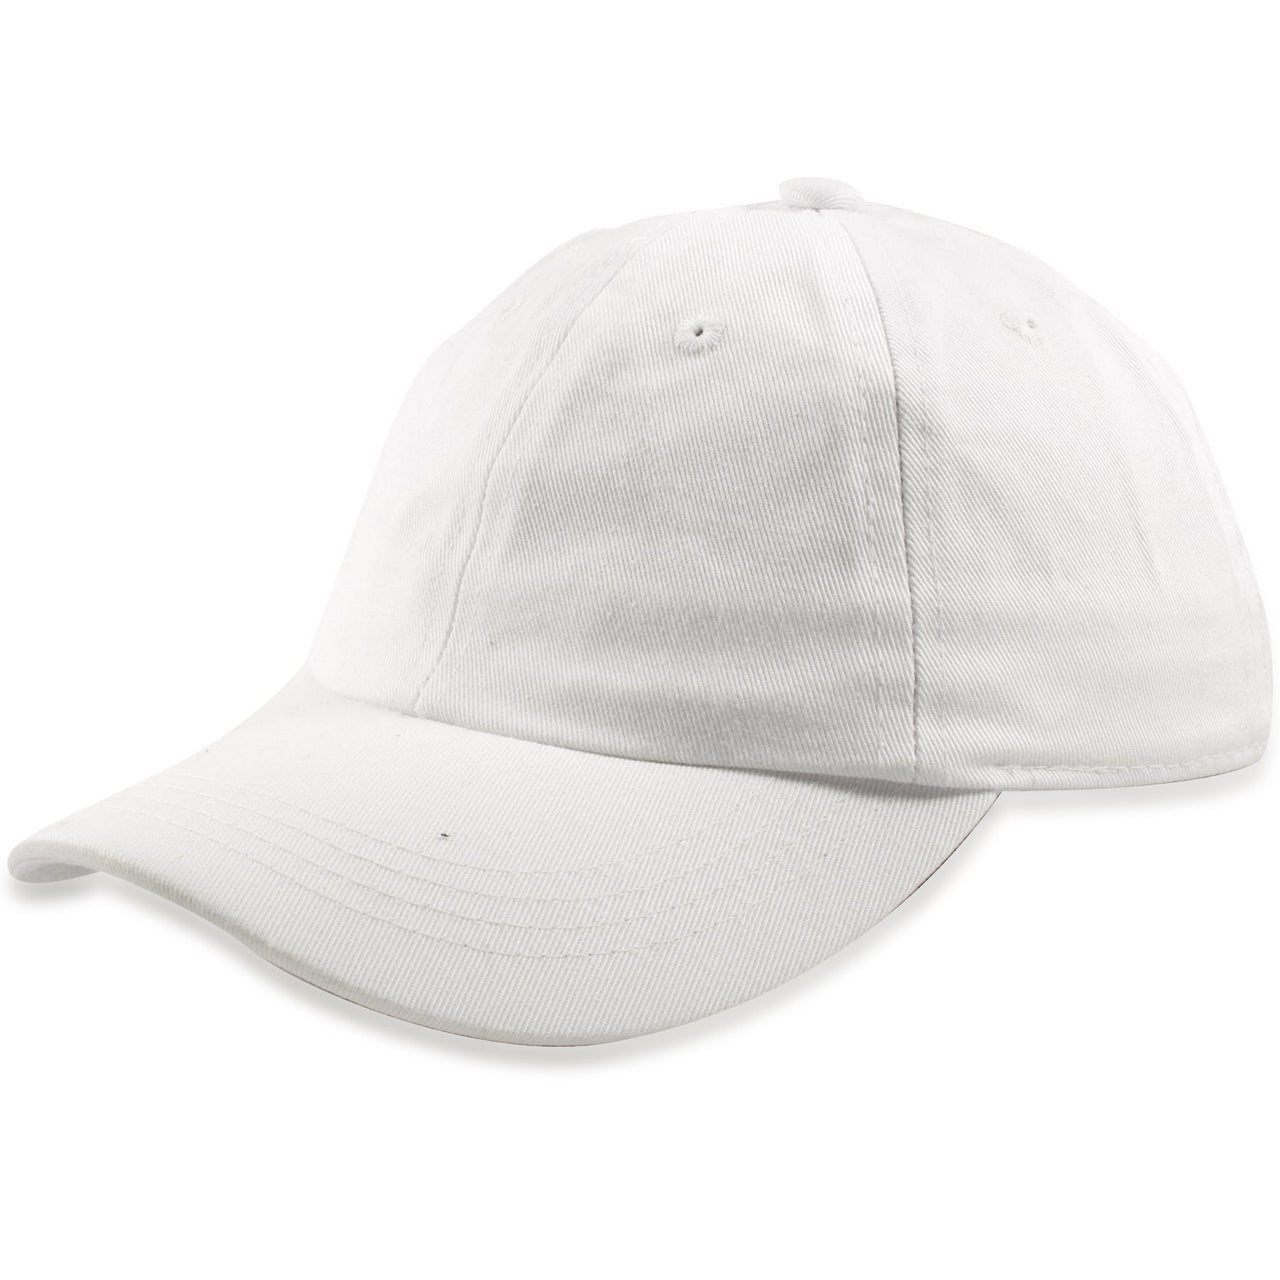 Blank White Kids Sized Adjustable Baseball Cap